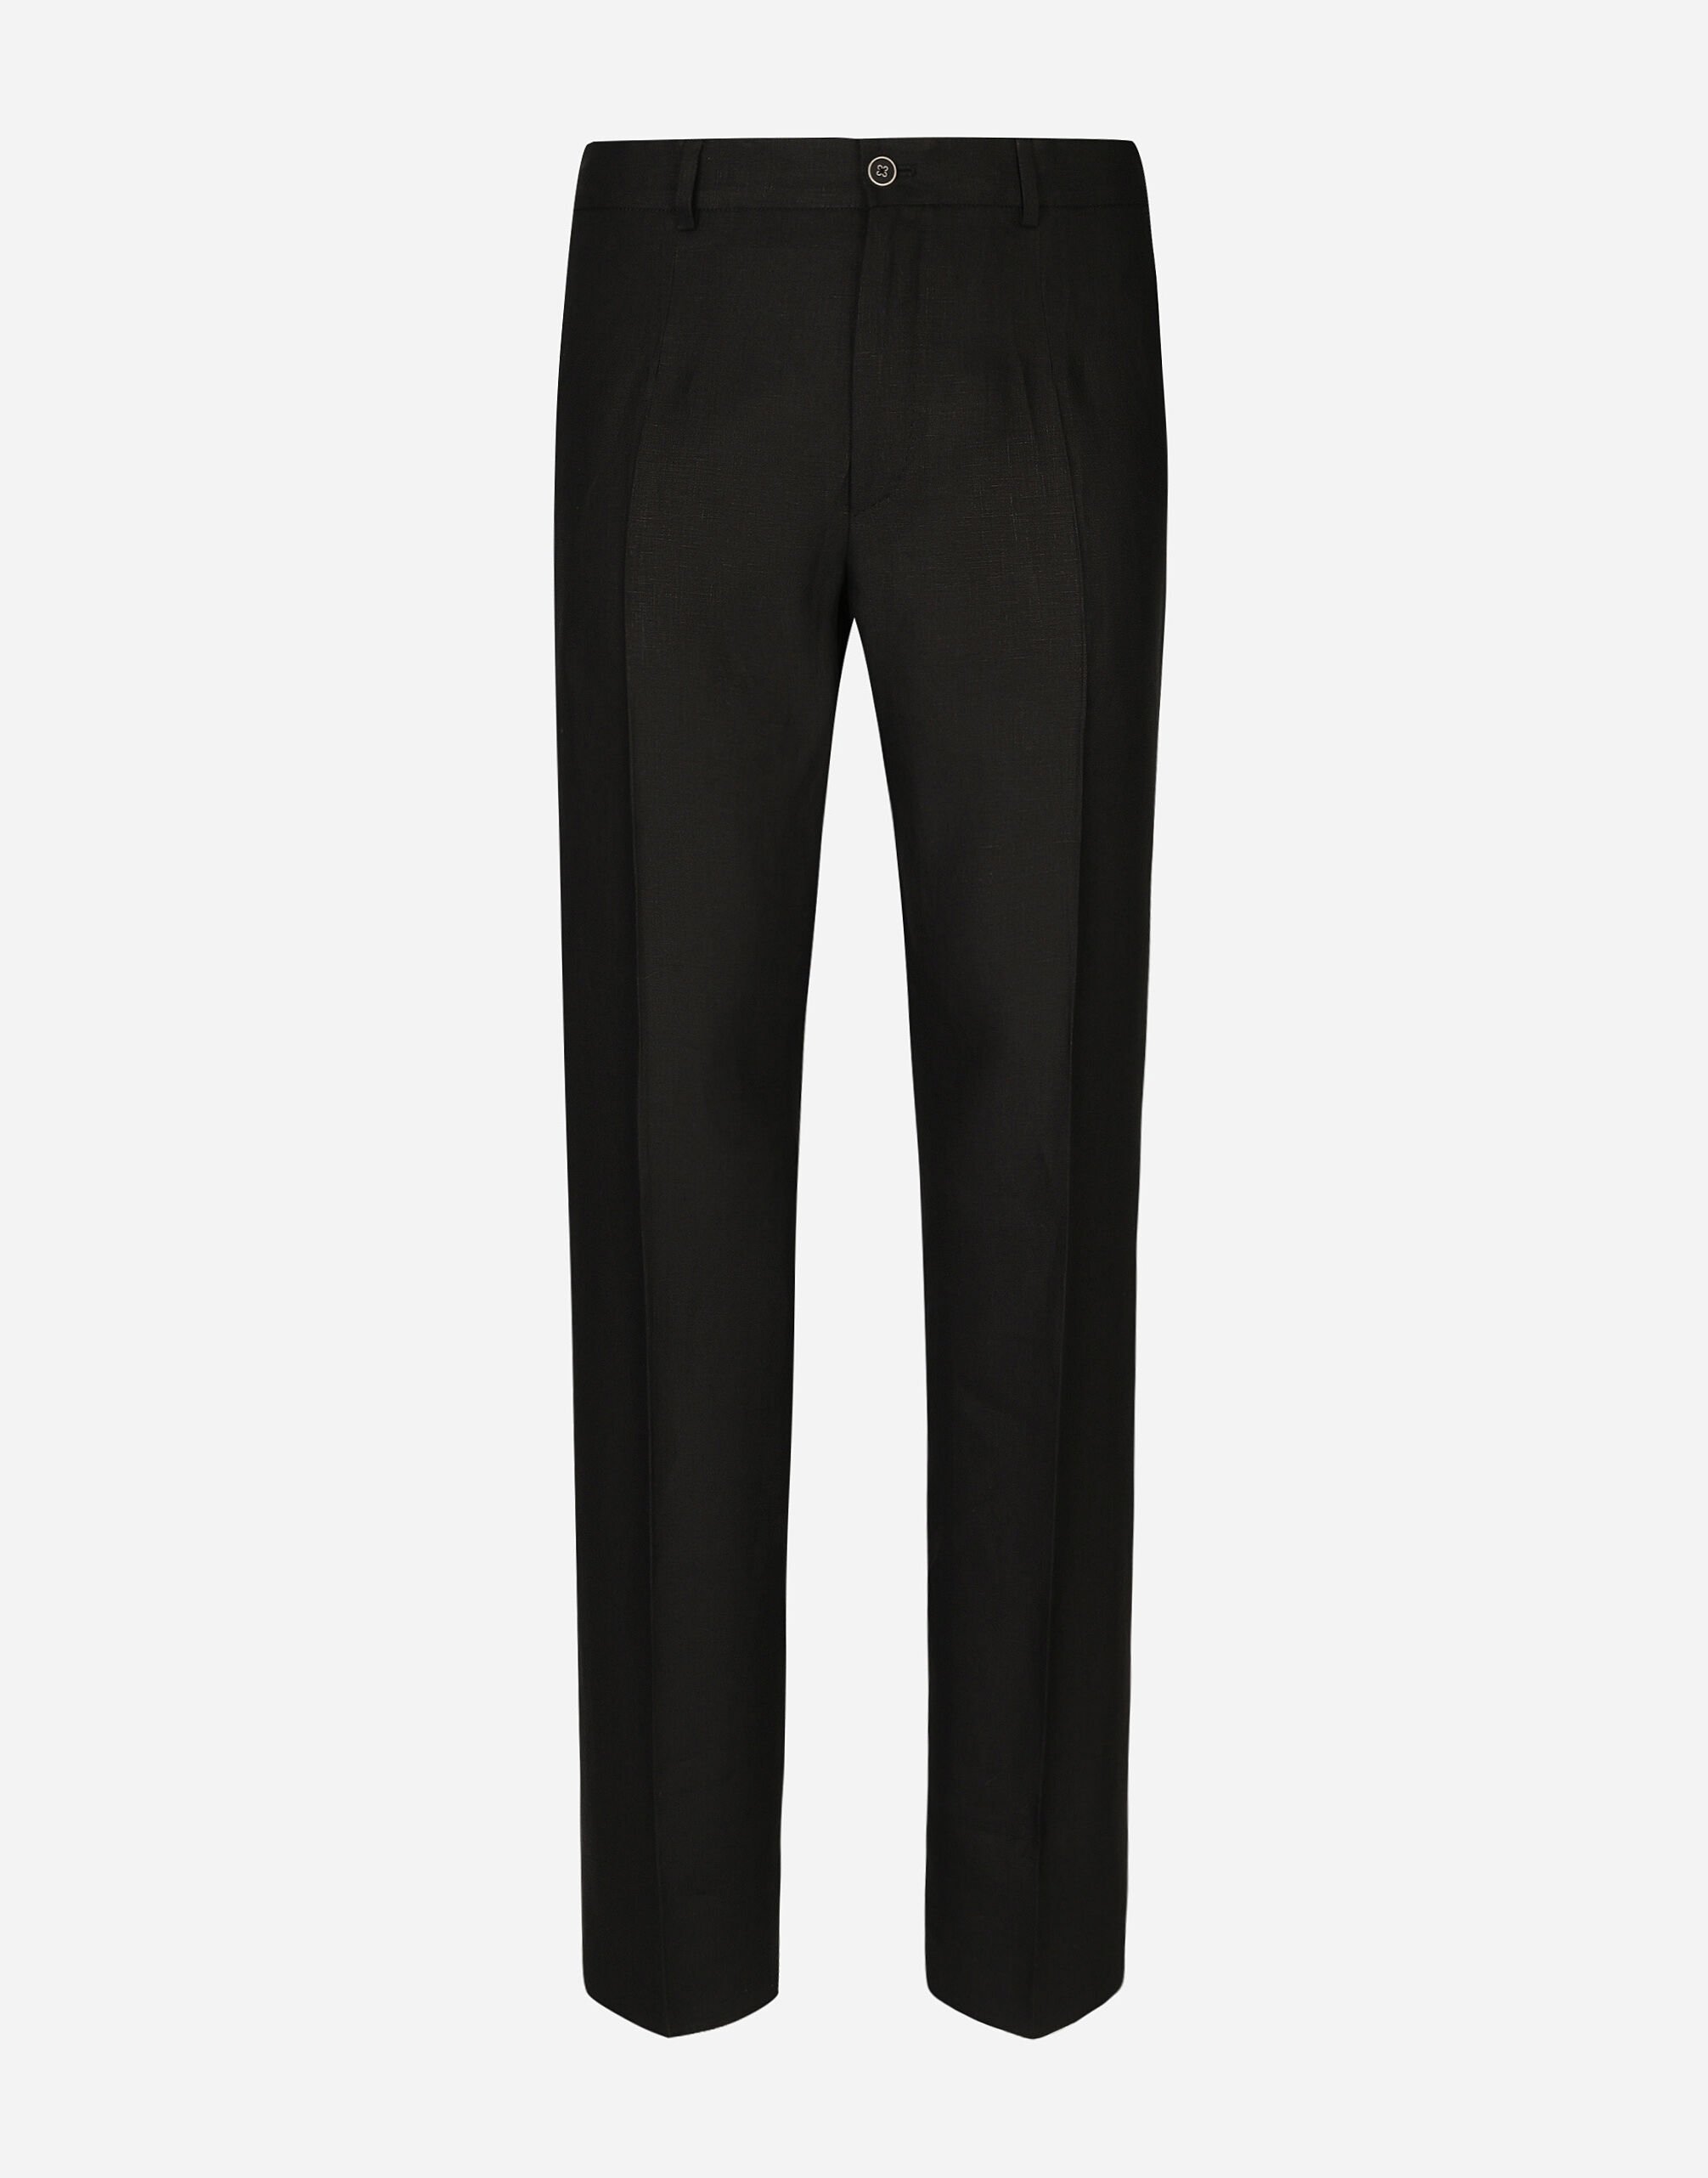 Dolce & Gabbana Tailored stretch cotton pants Print GVCRATHI1QB